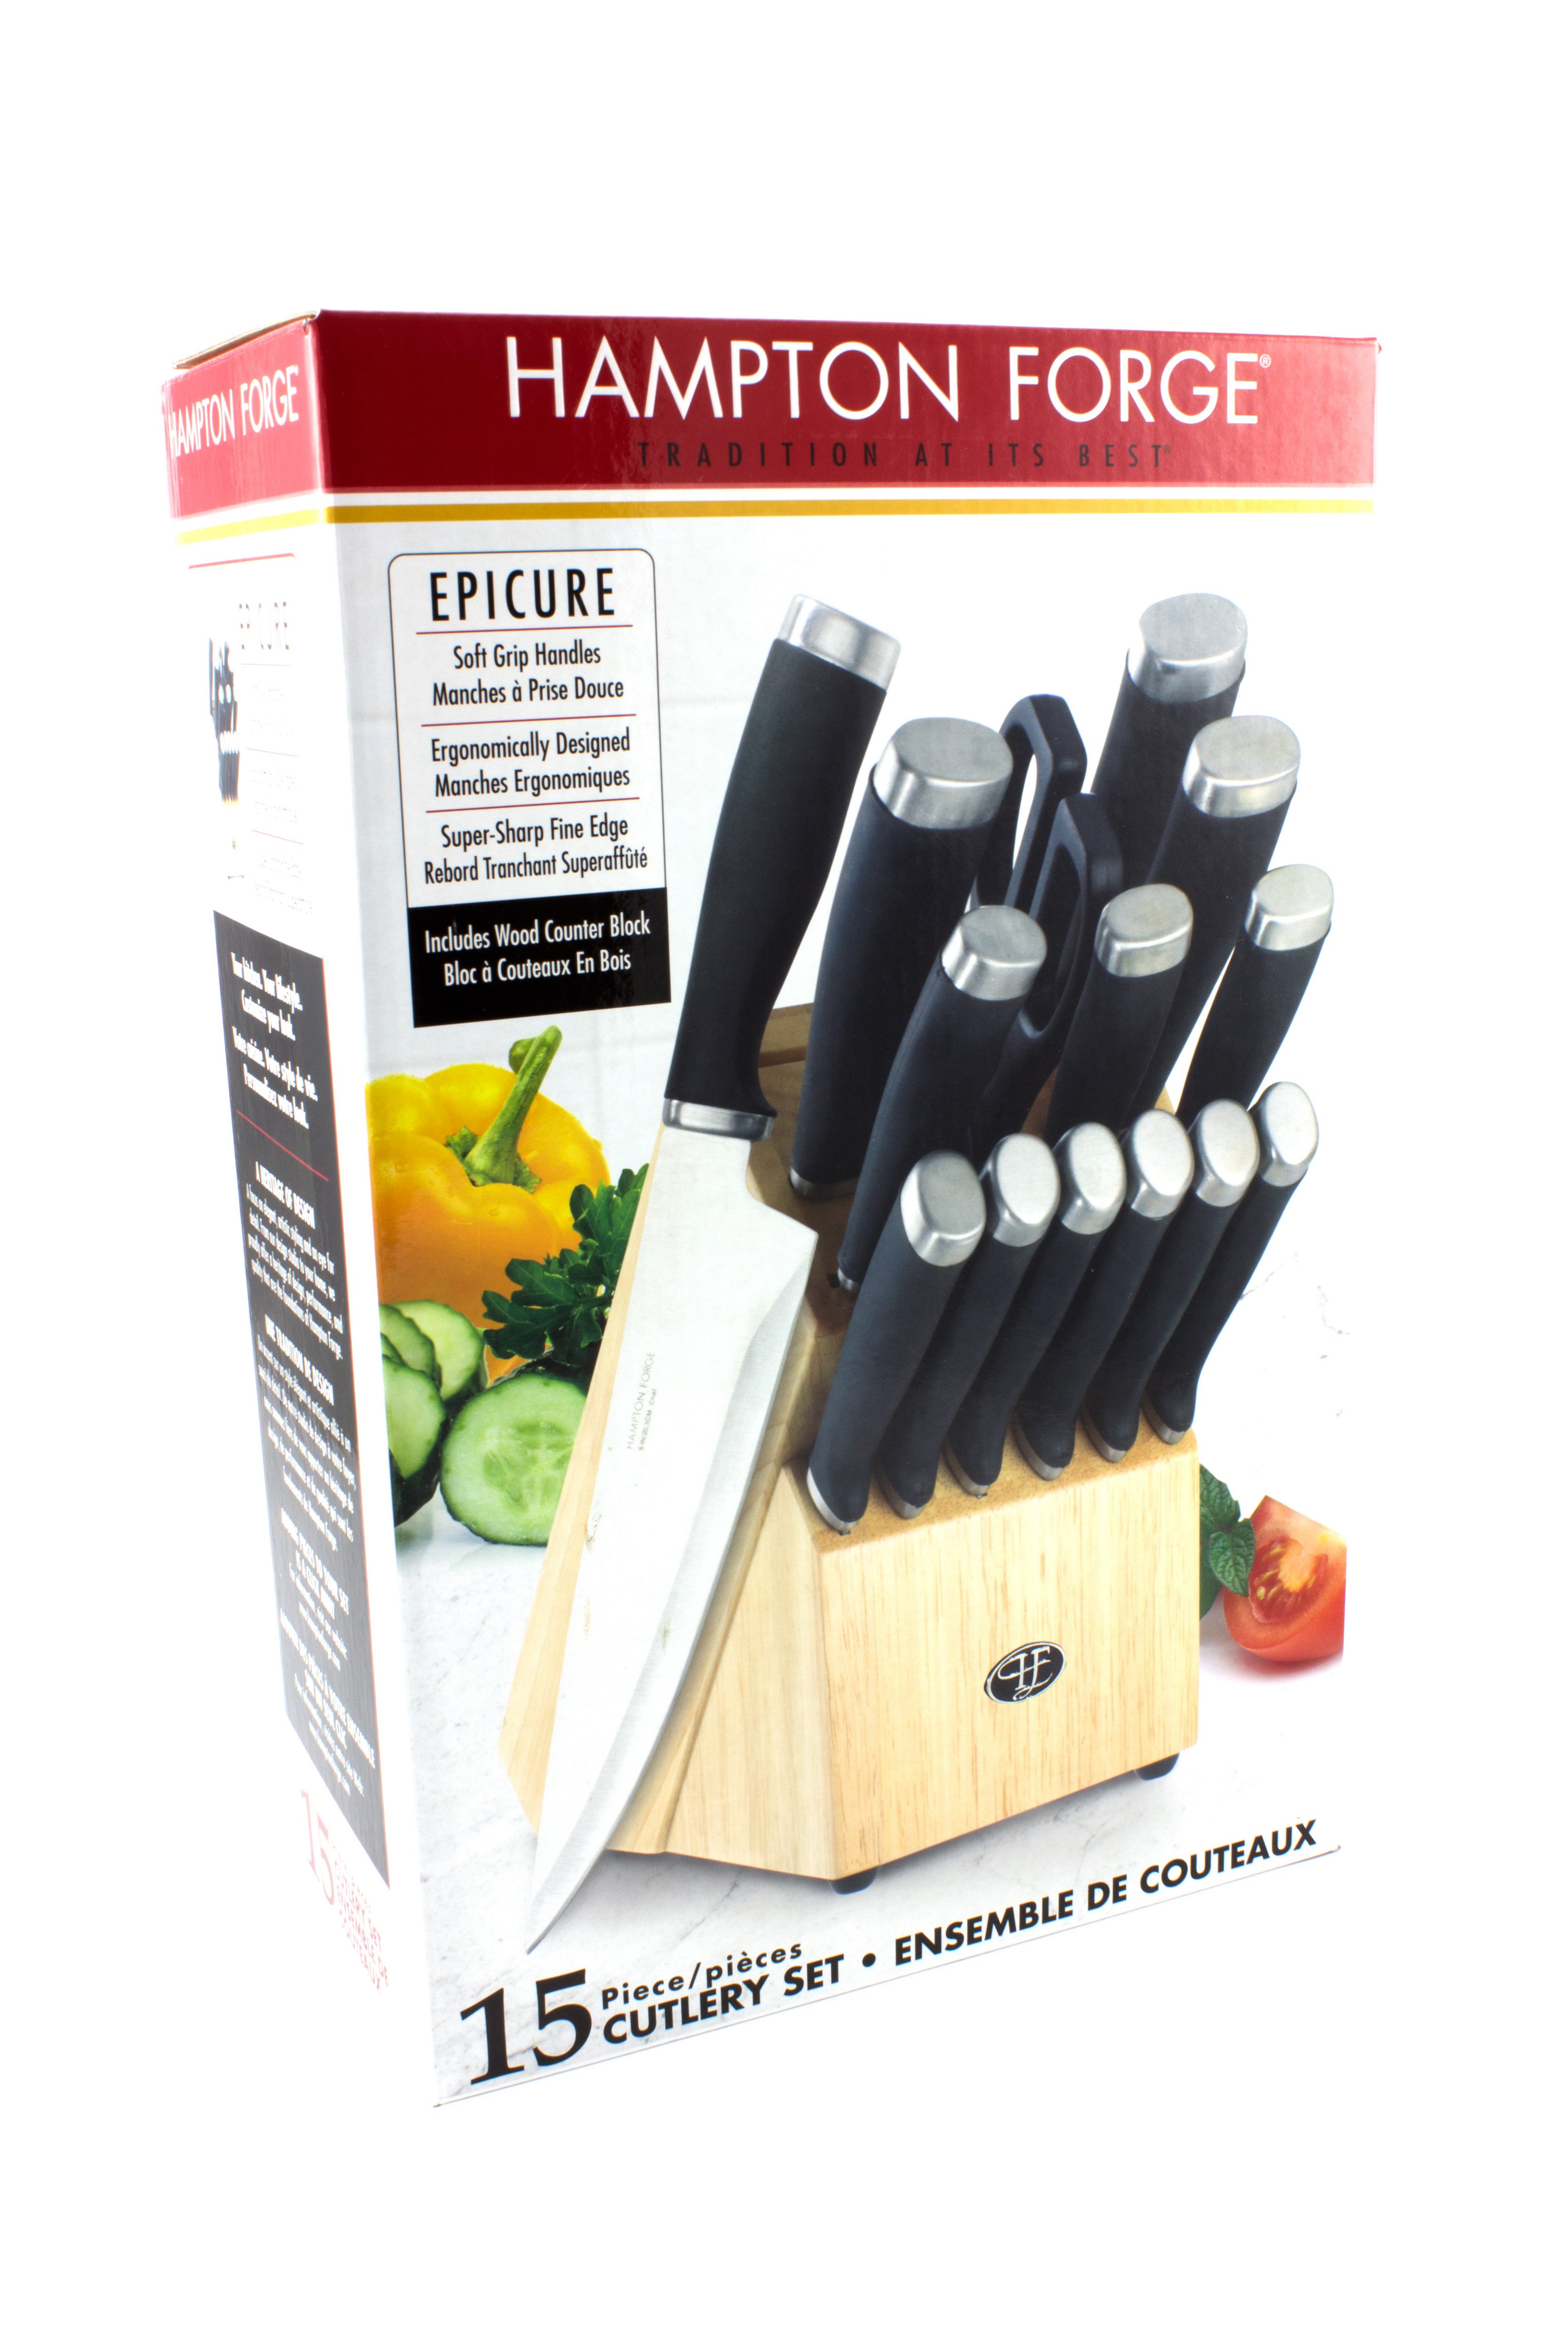 Hampton Forge Epicure Cutlery set - Shop Knife Sets at H-E-B